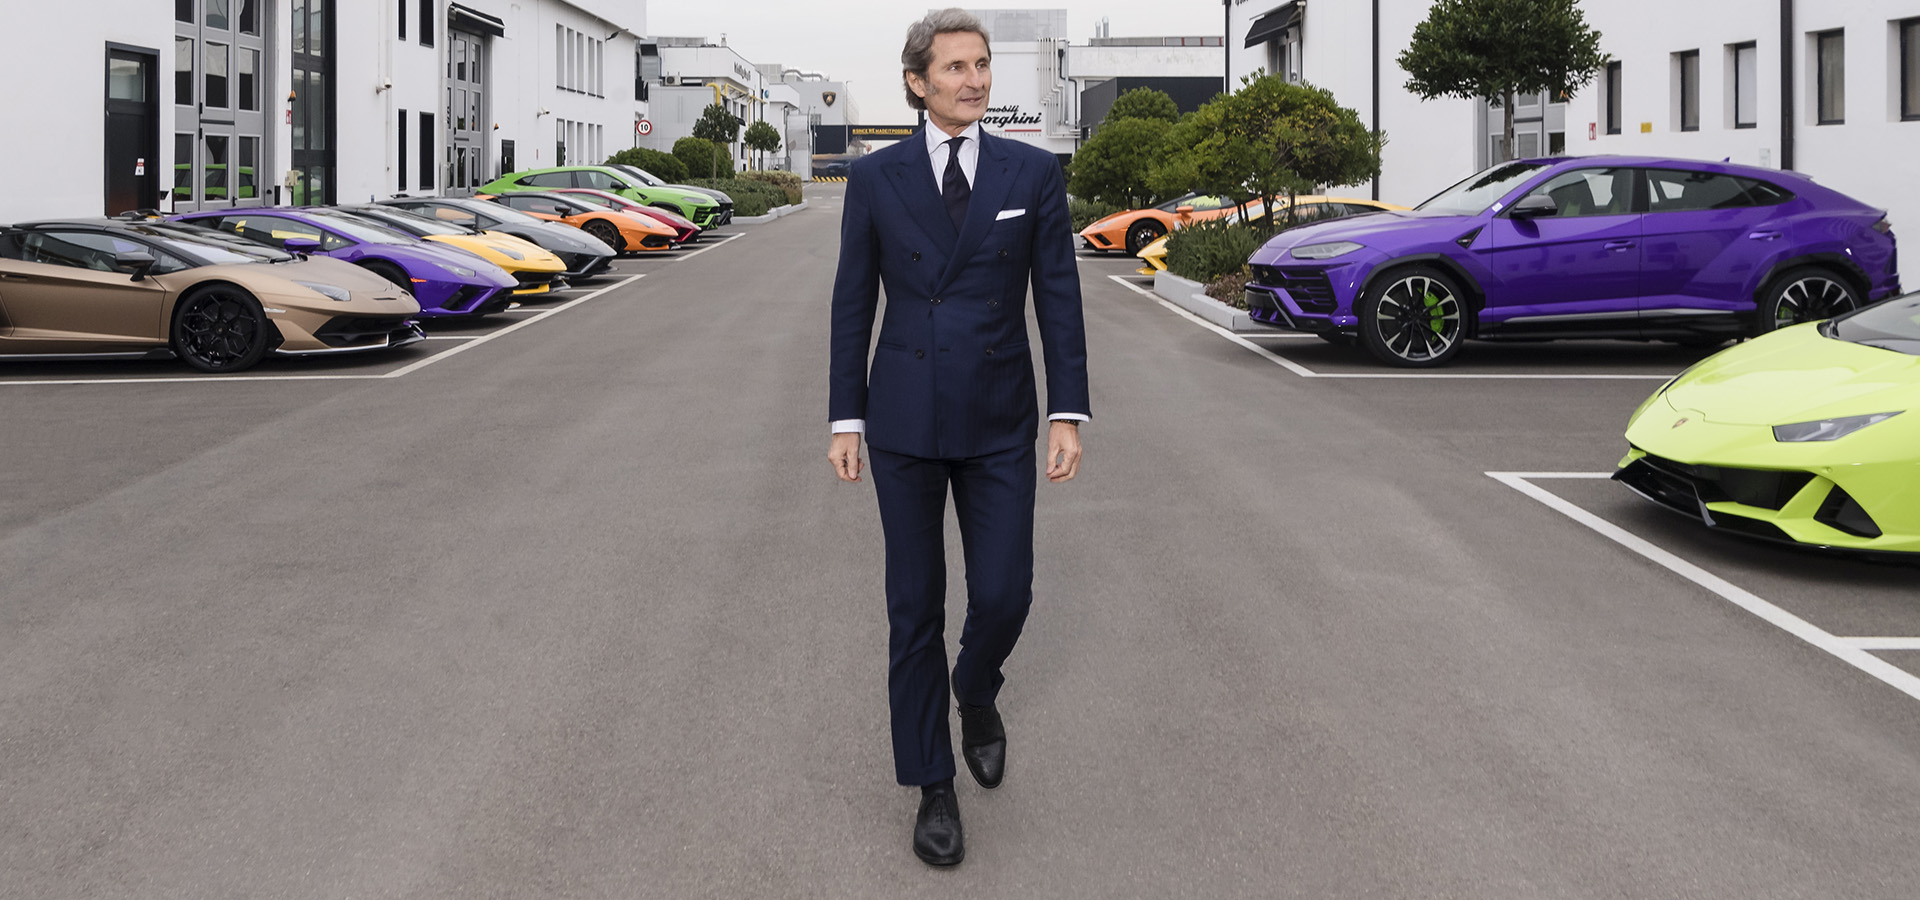 Stephan Winkelmann's return to Lamborghini in his own words